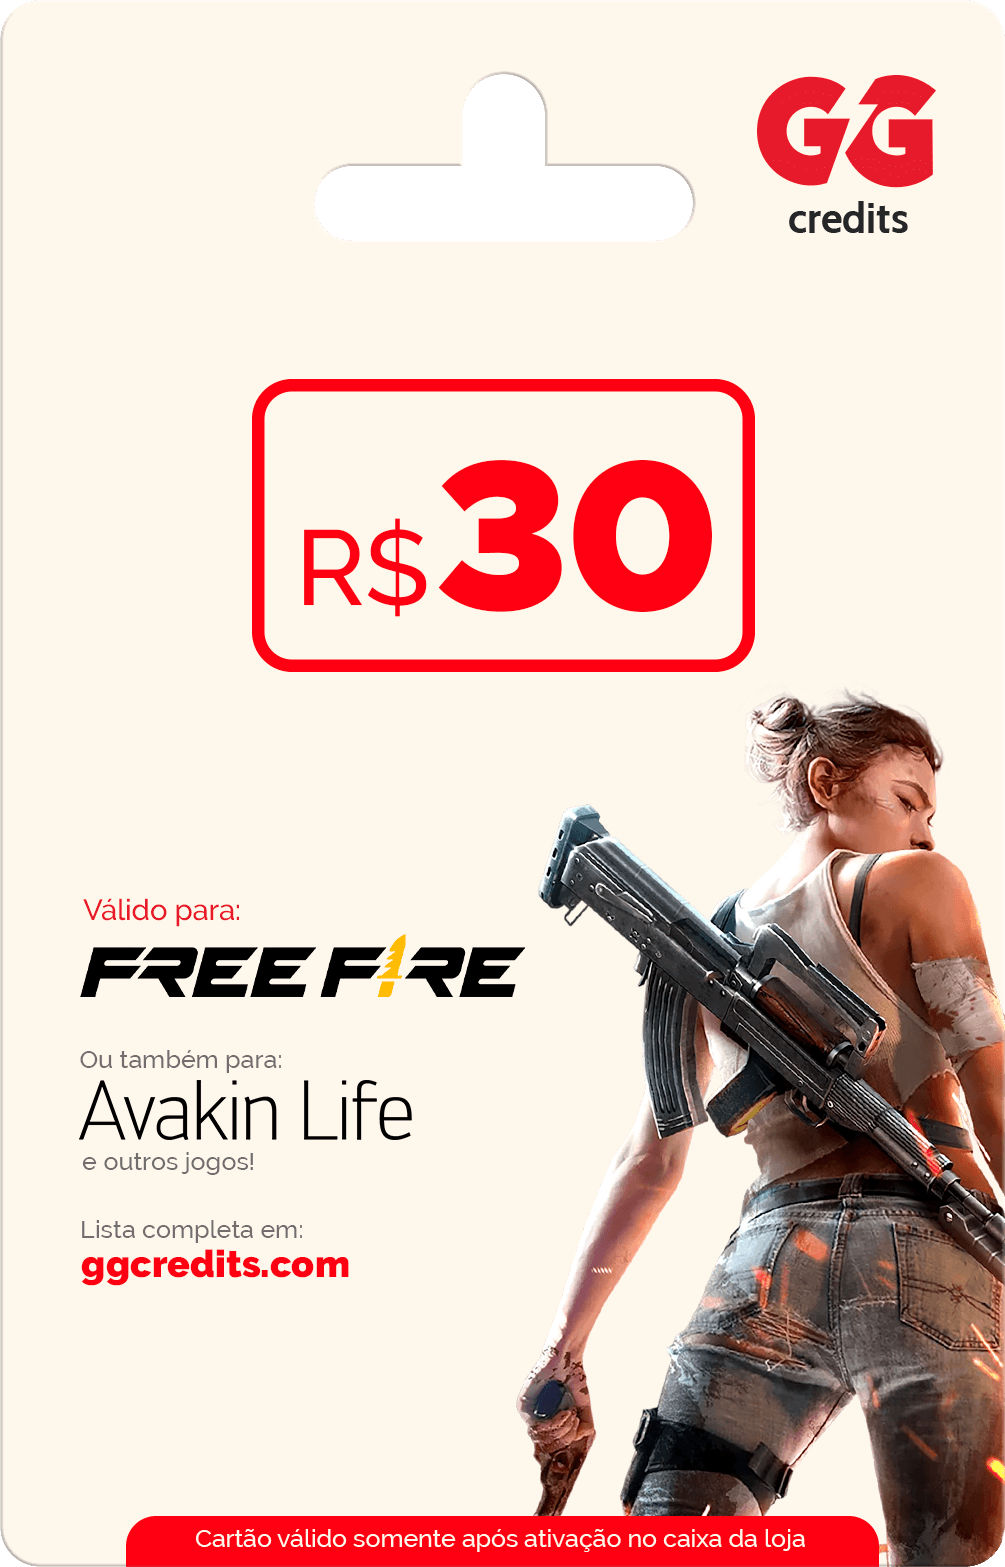 GG Credits - Free Fire - R$30,00